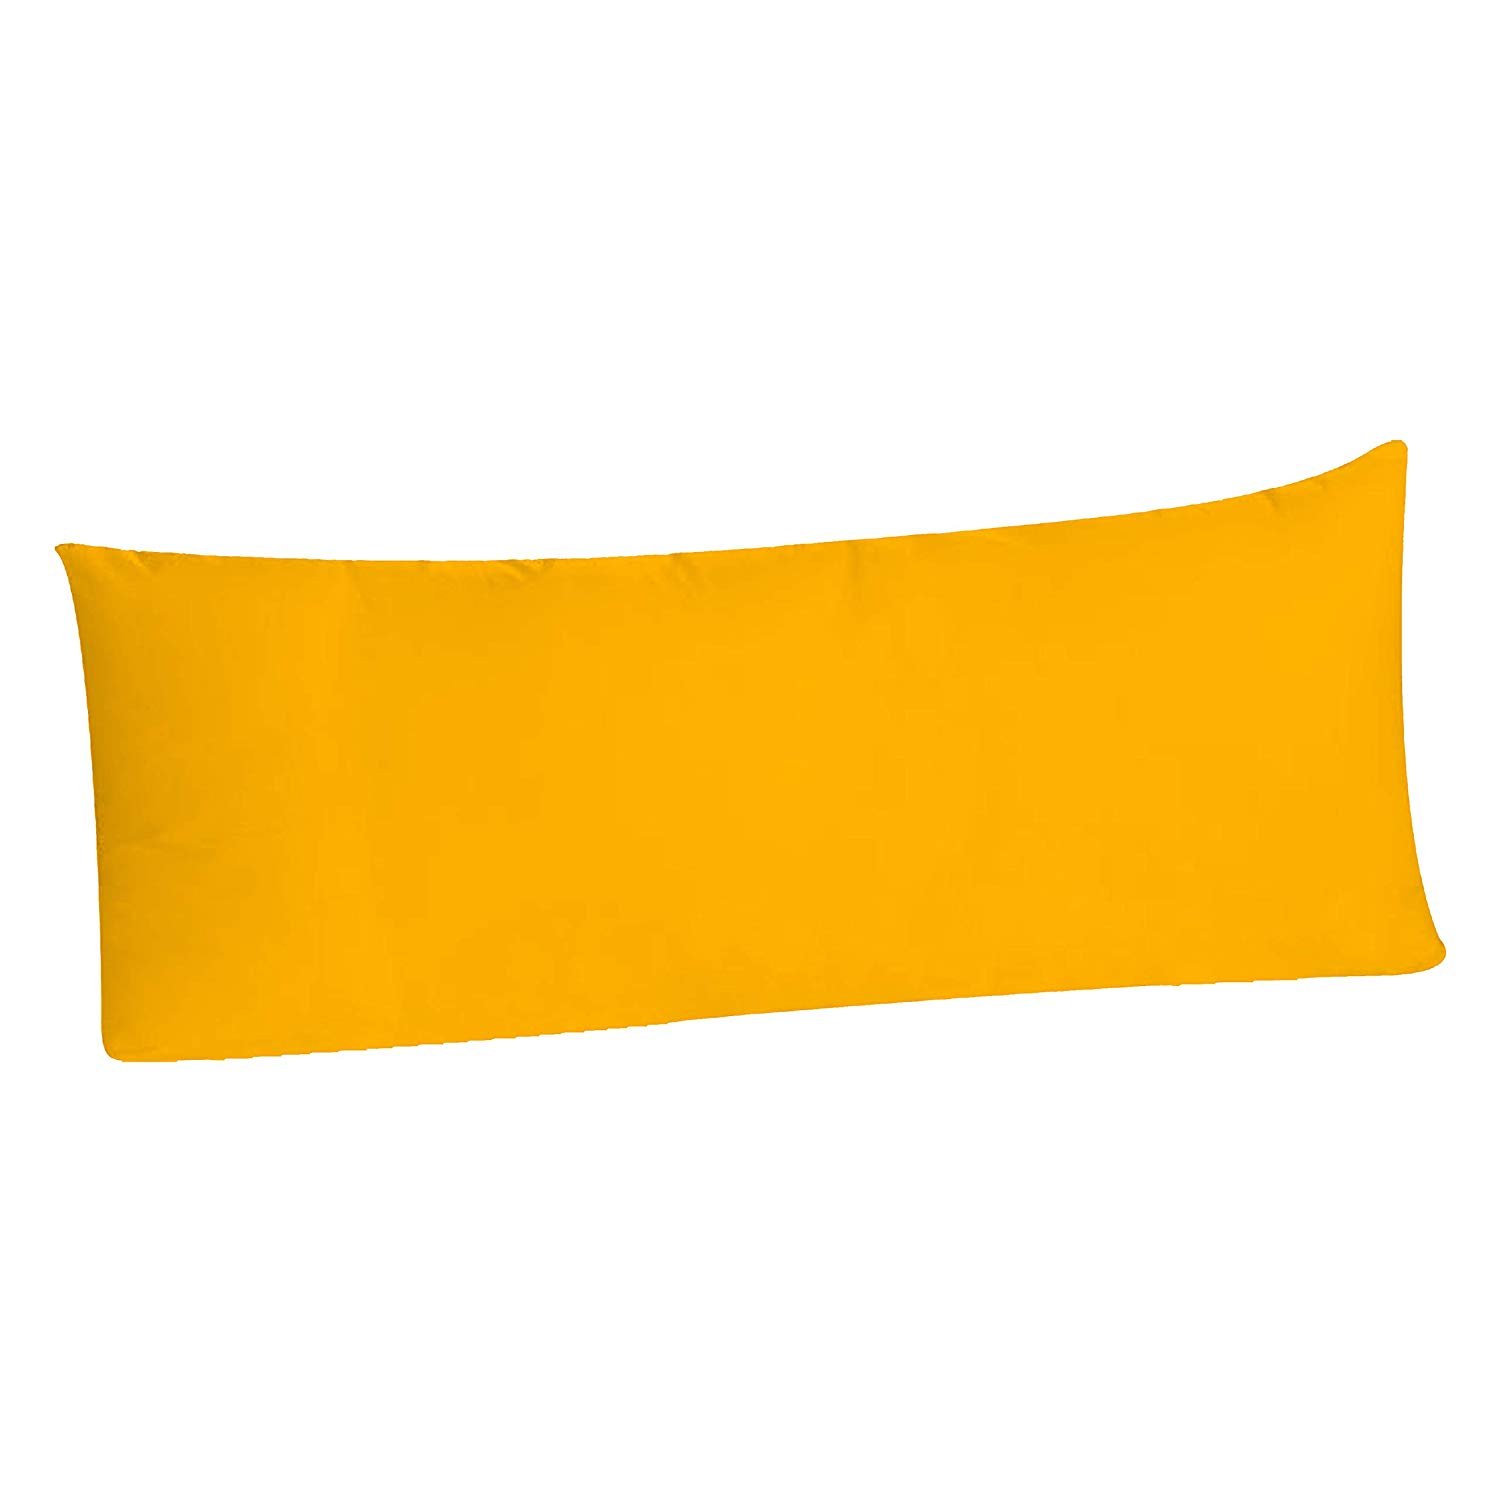 AMERICAN PILLOWCASE Body Pillow Cover 20x54, Microfiber, Choose Color & Style